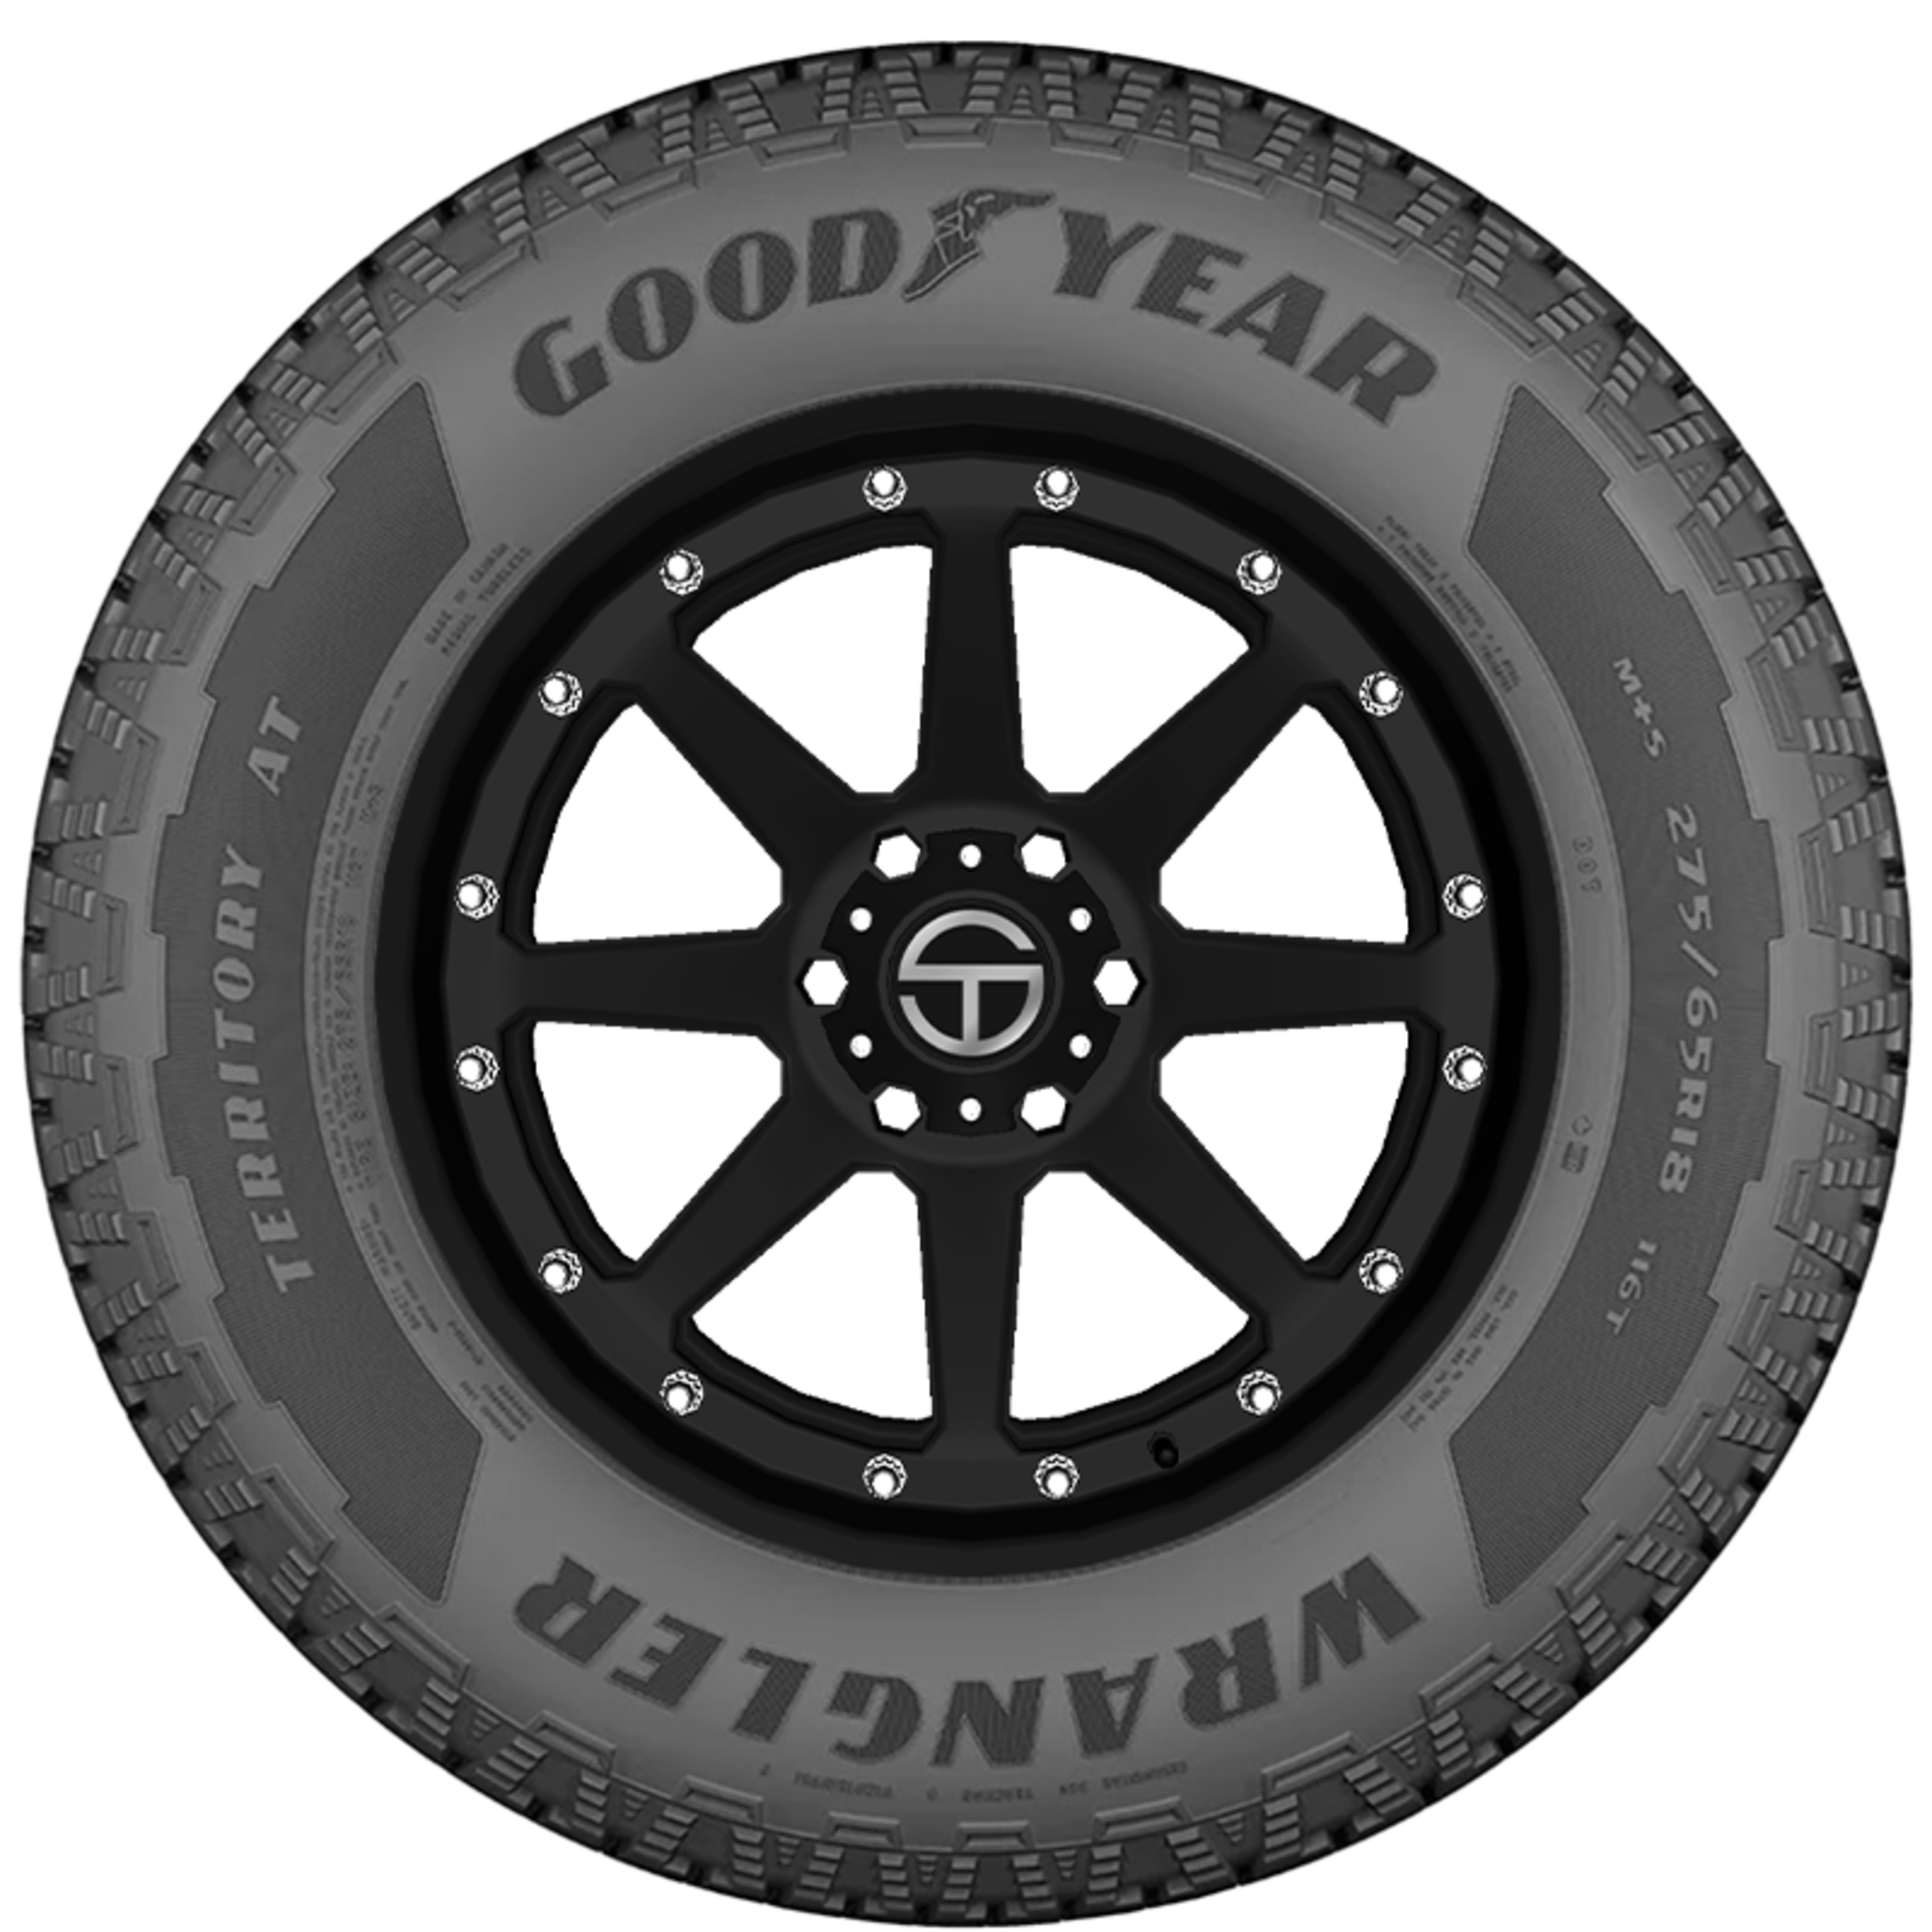 Goodyear Wrangler Territory AT Tire Reviews & Ratings | SimpleTire